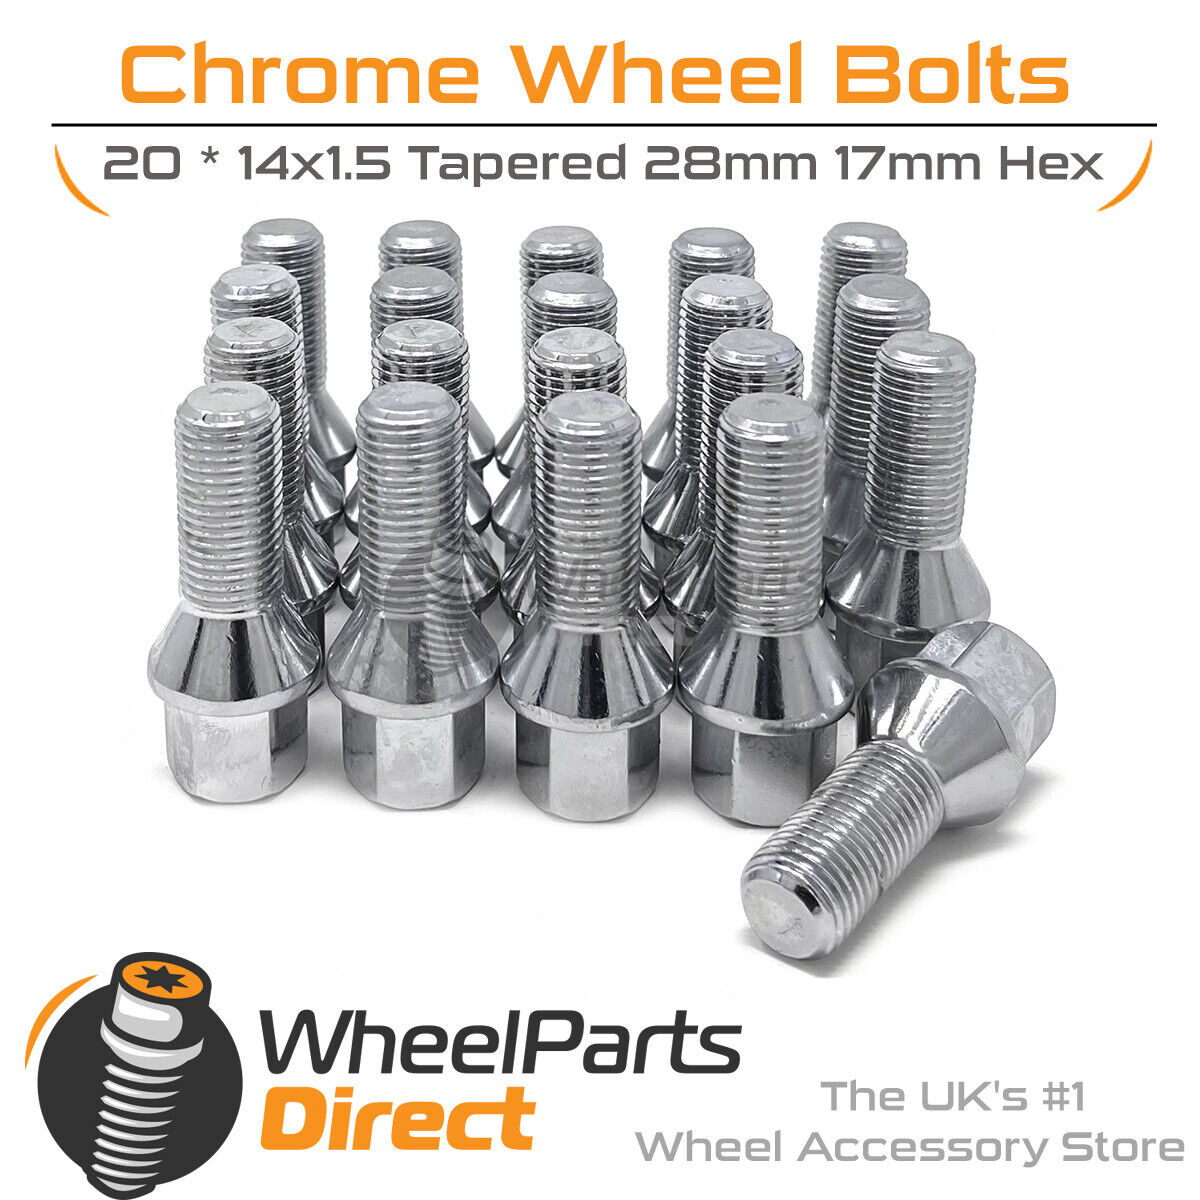 Wheel Bolts (20) 14x1.5 Chrome for VW Golf R32 [Mk5] 05-10 on Aftermarket Wheels